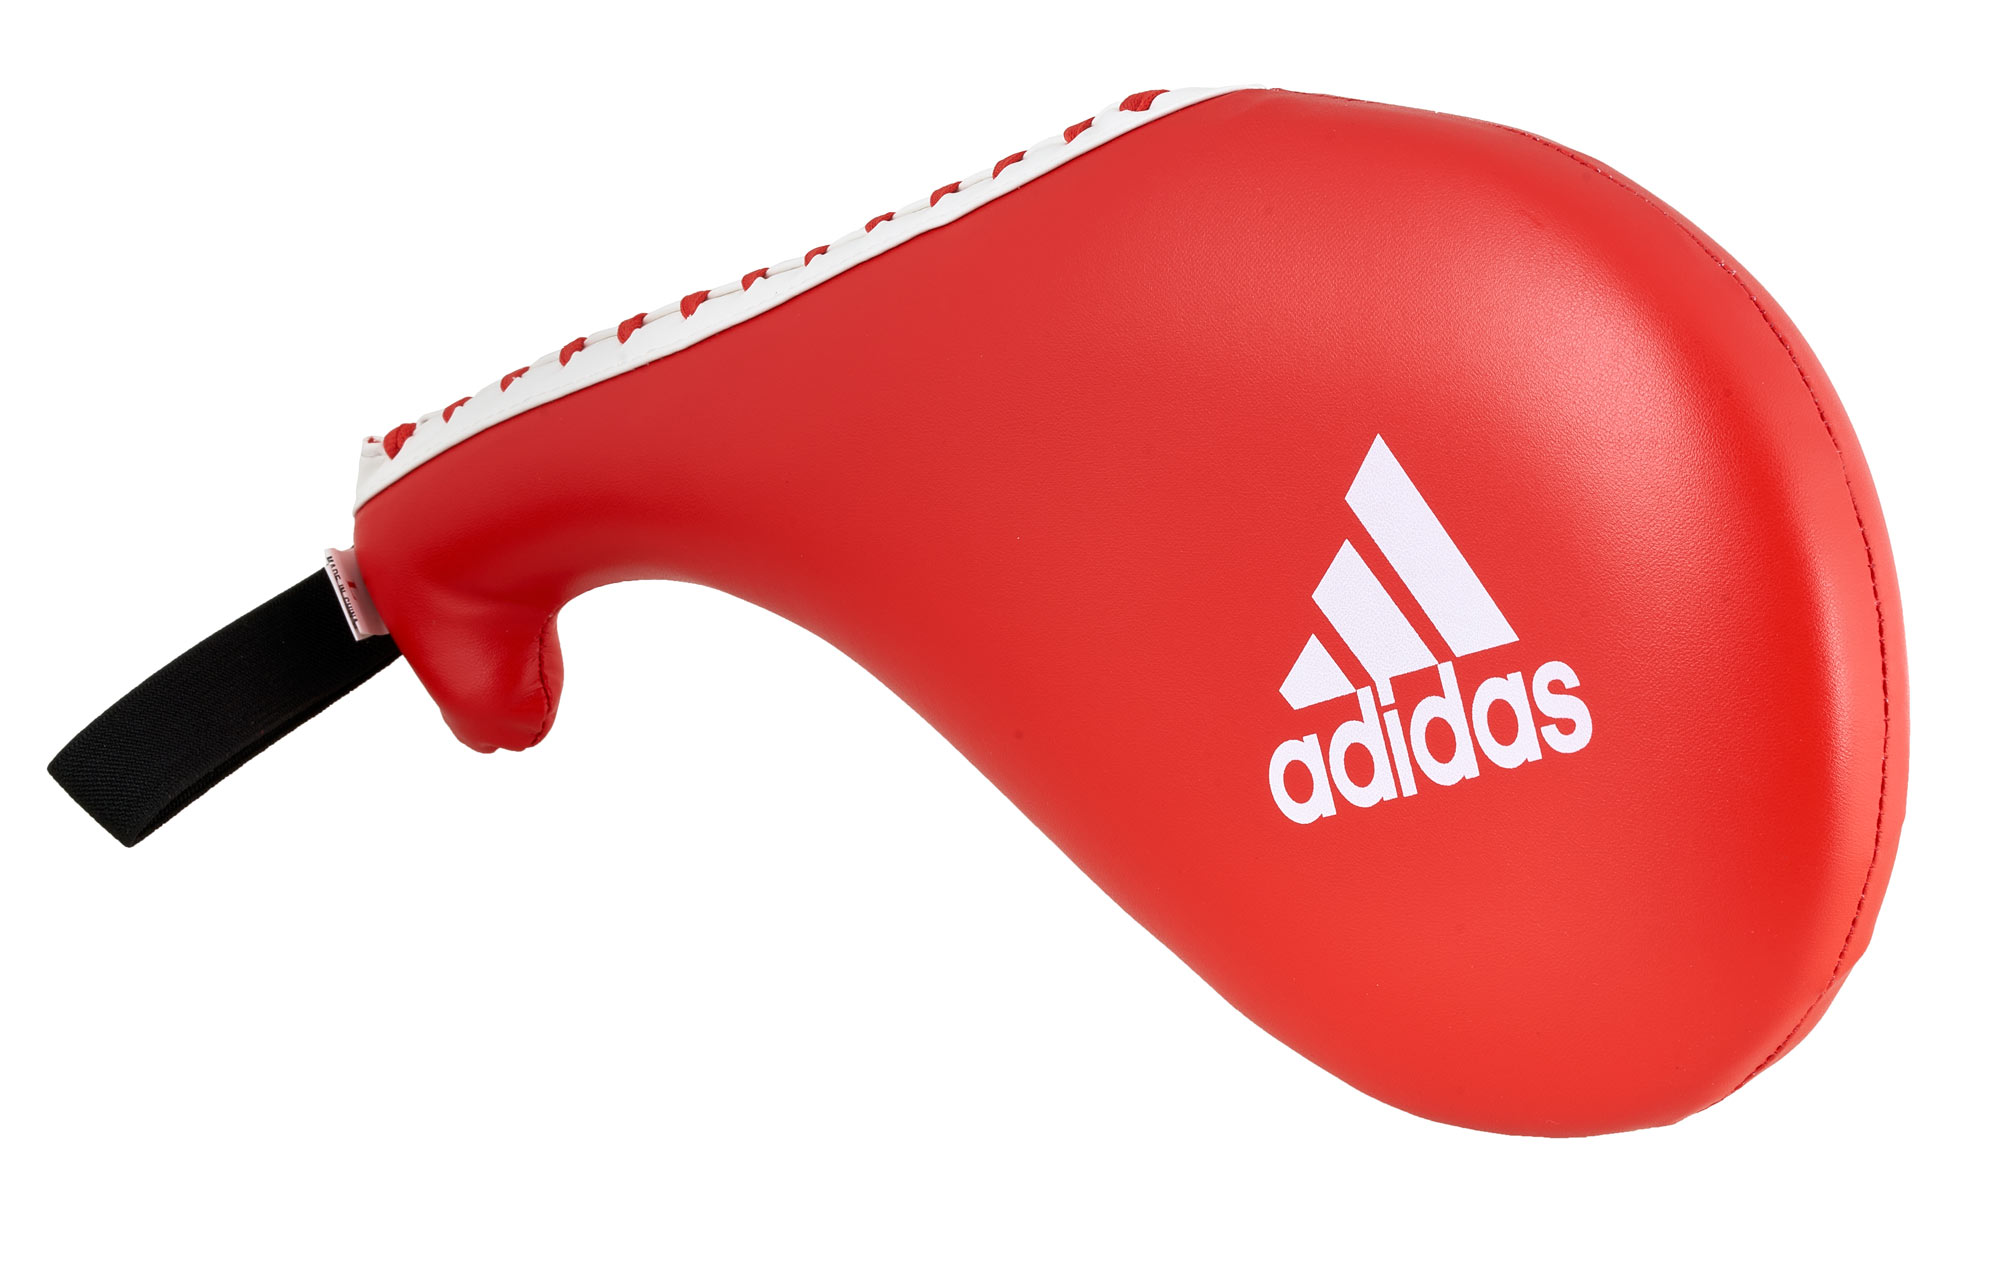 adidas taekwondo single target pad ADITST03 red, small size